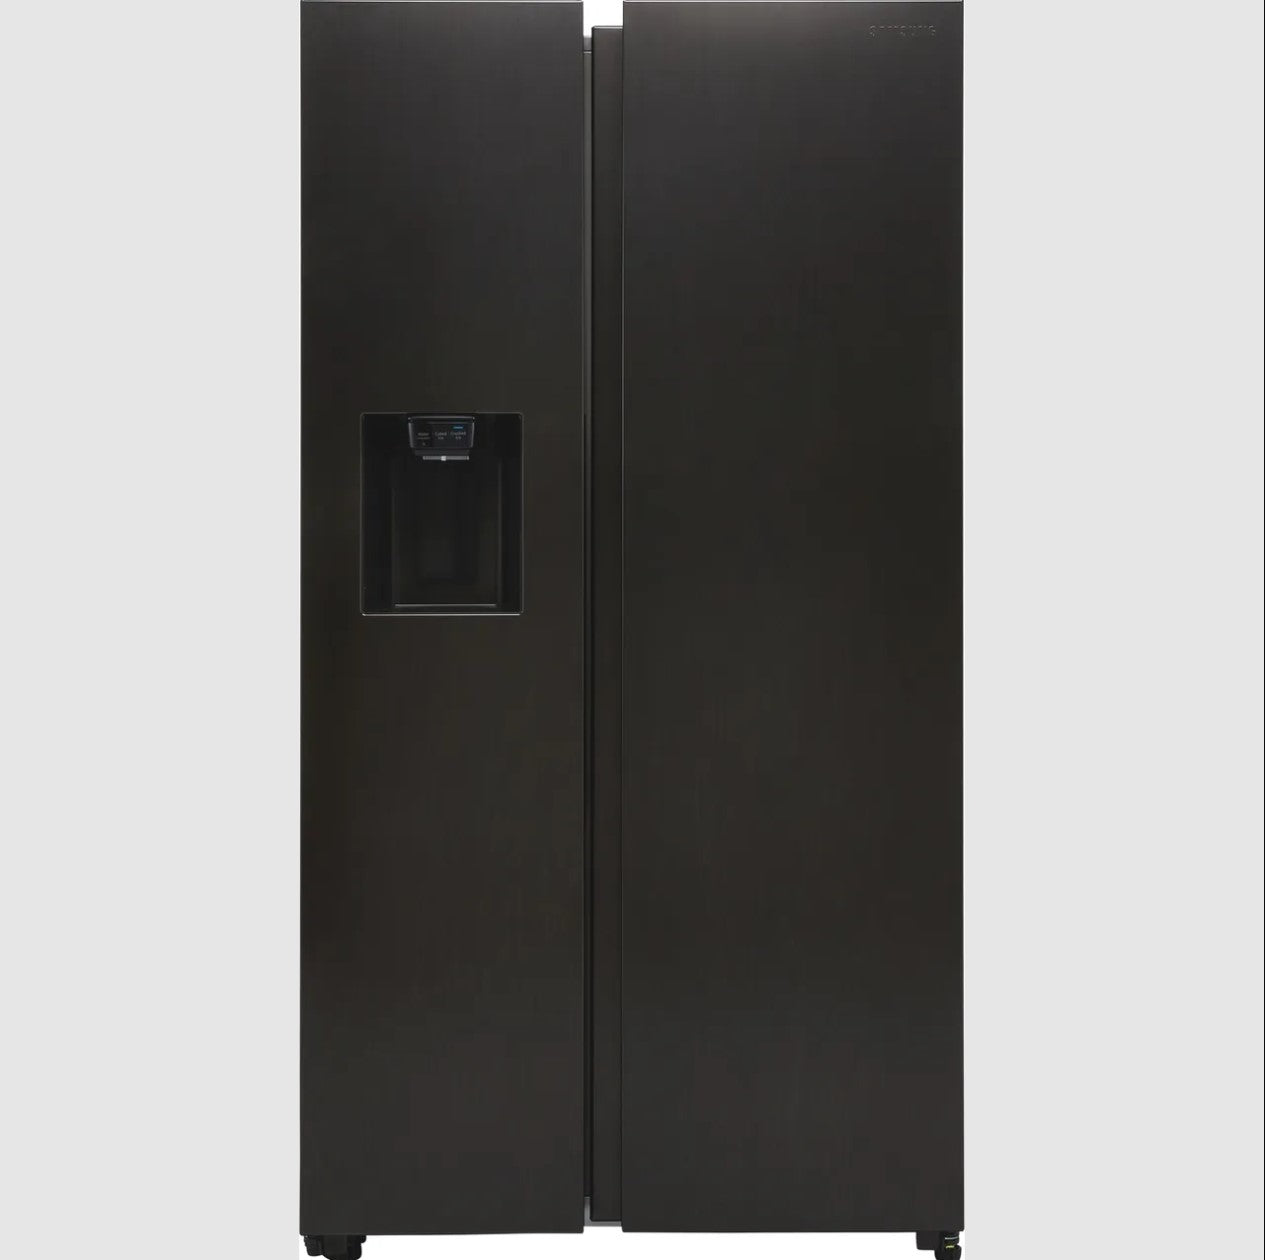 Samsung RS68A8830B1 Fridge Freezer American in Black Steel